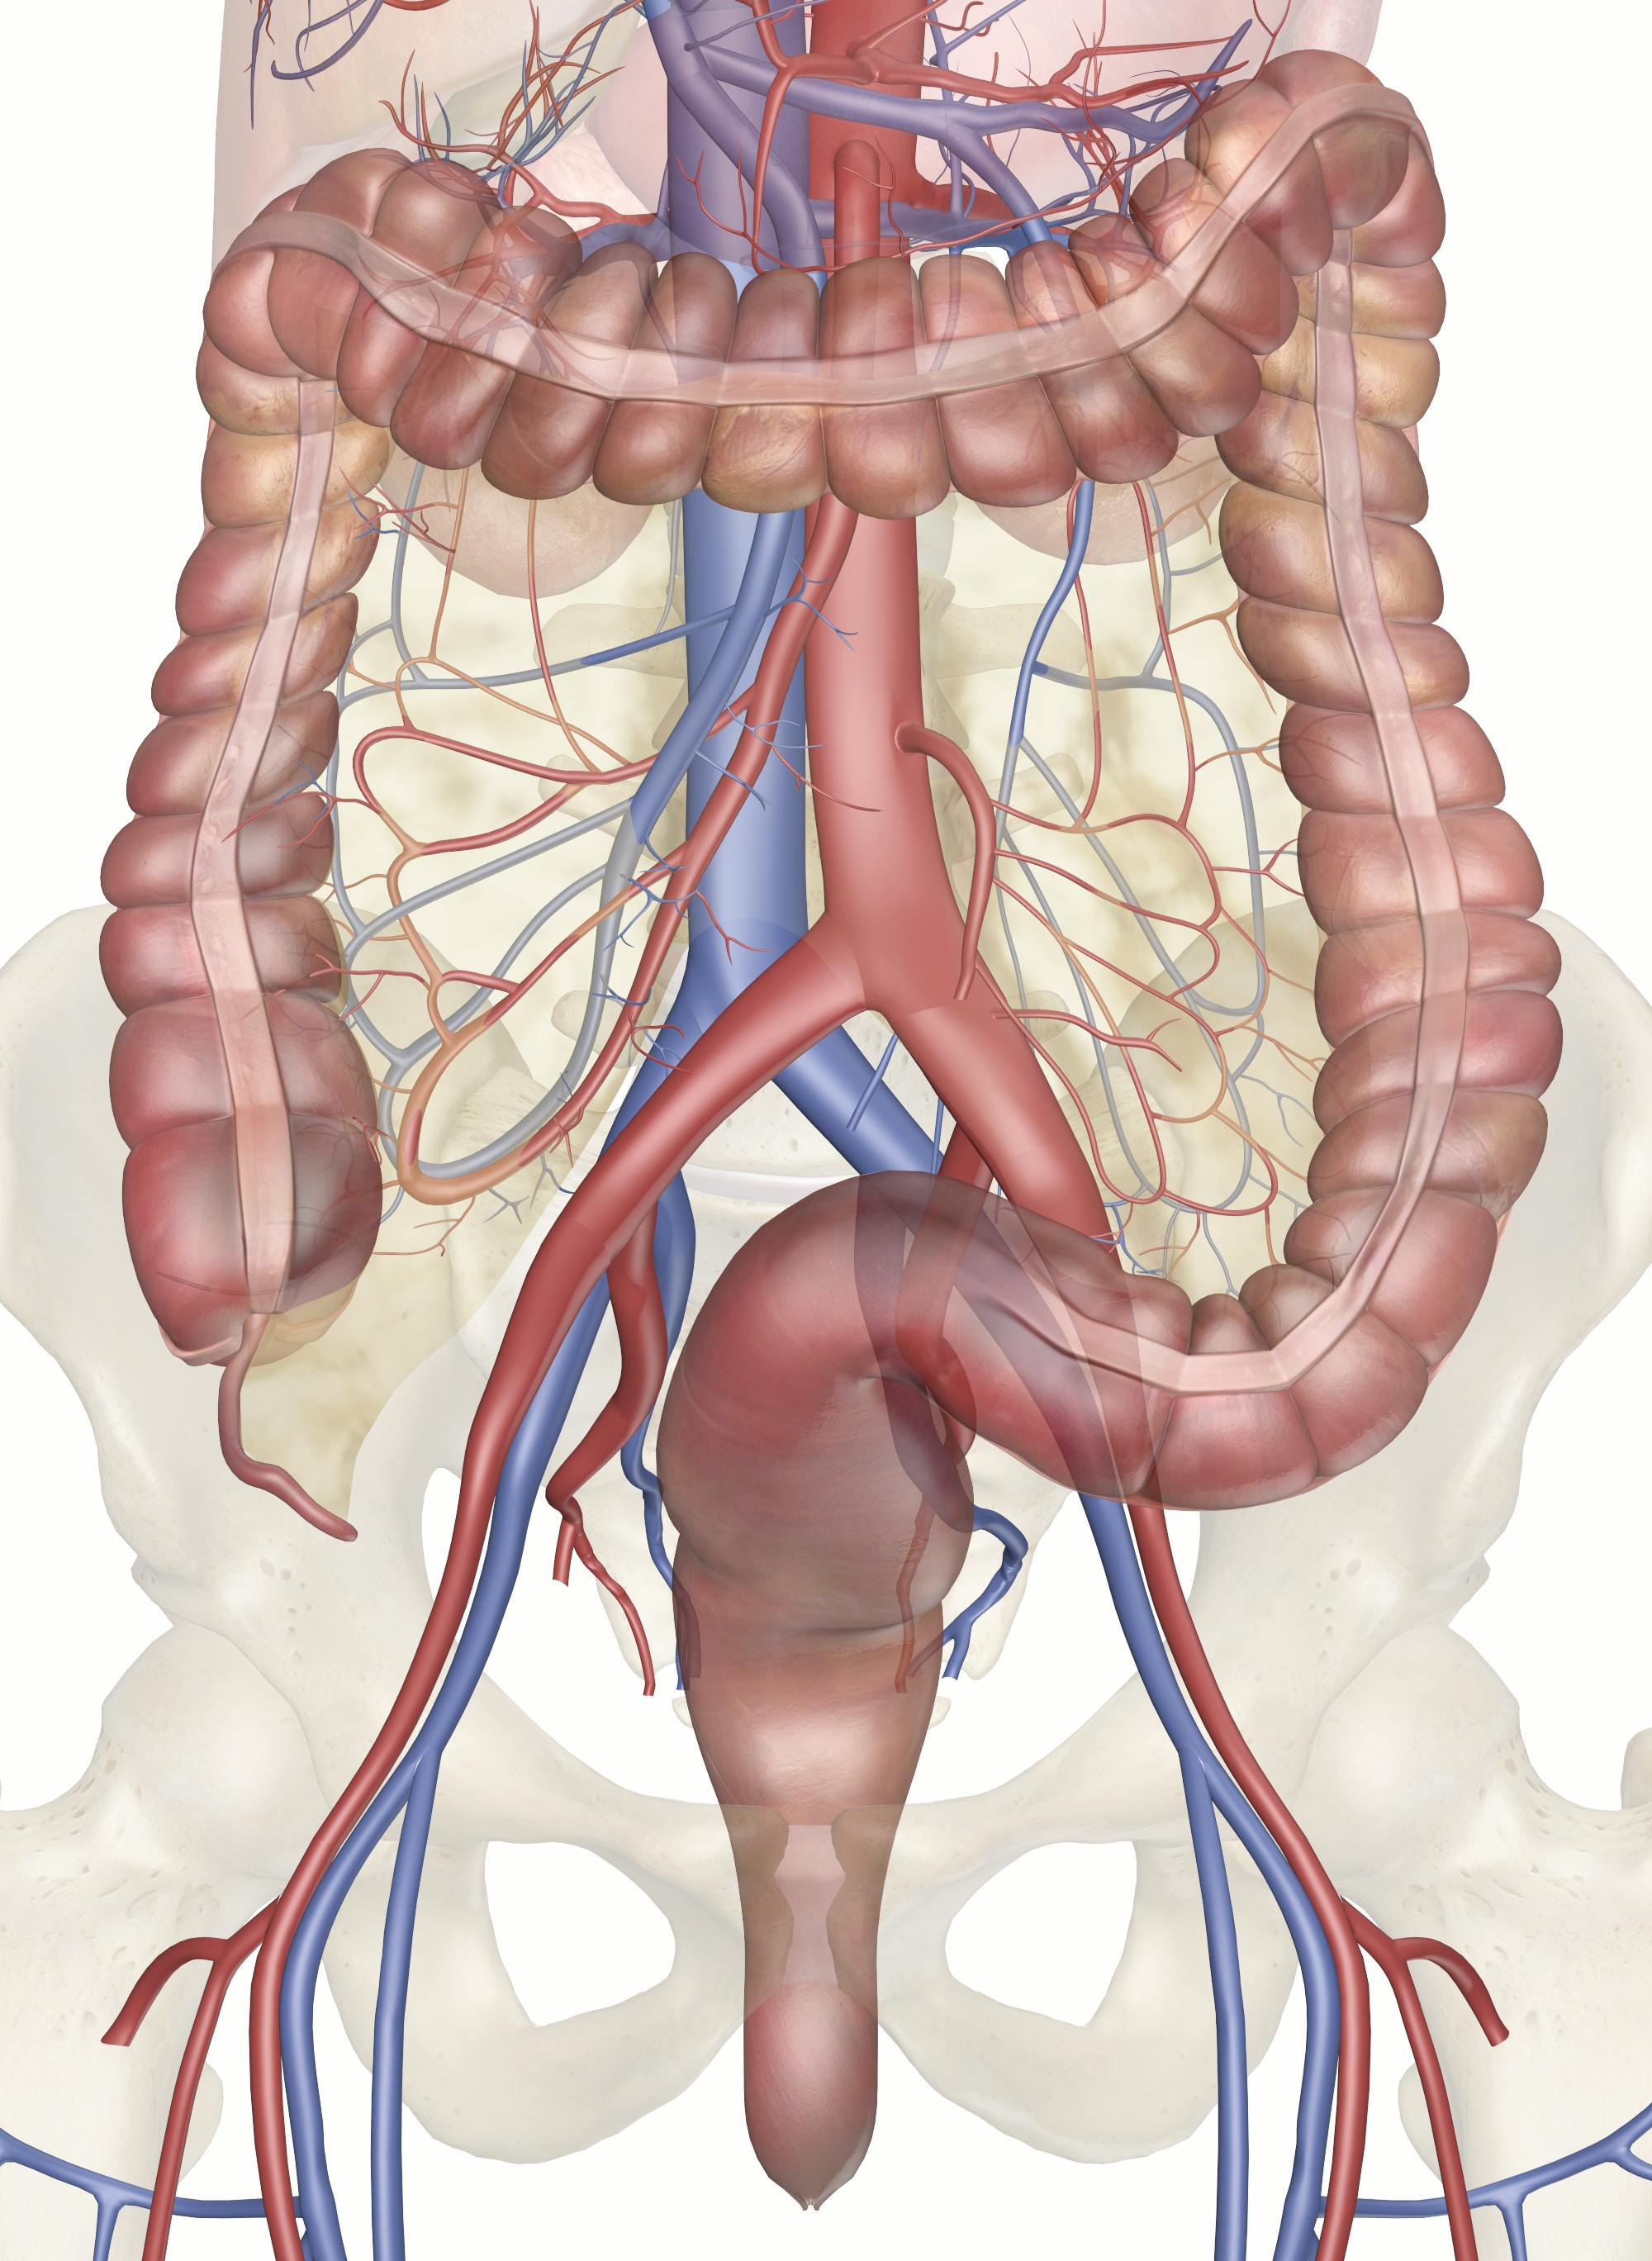 small intestine diagram anatomy